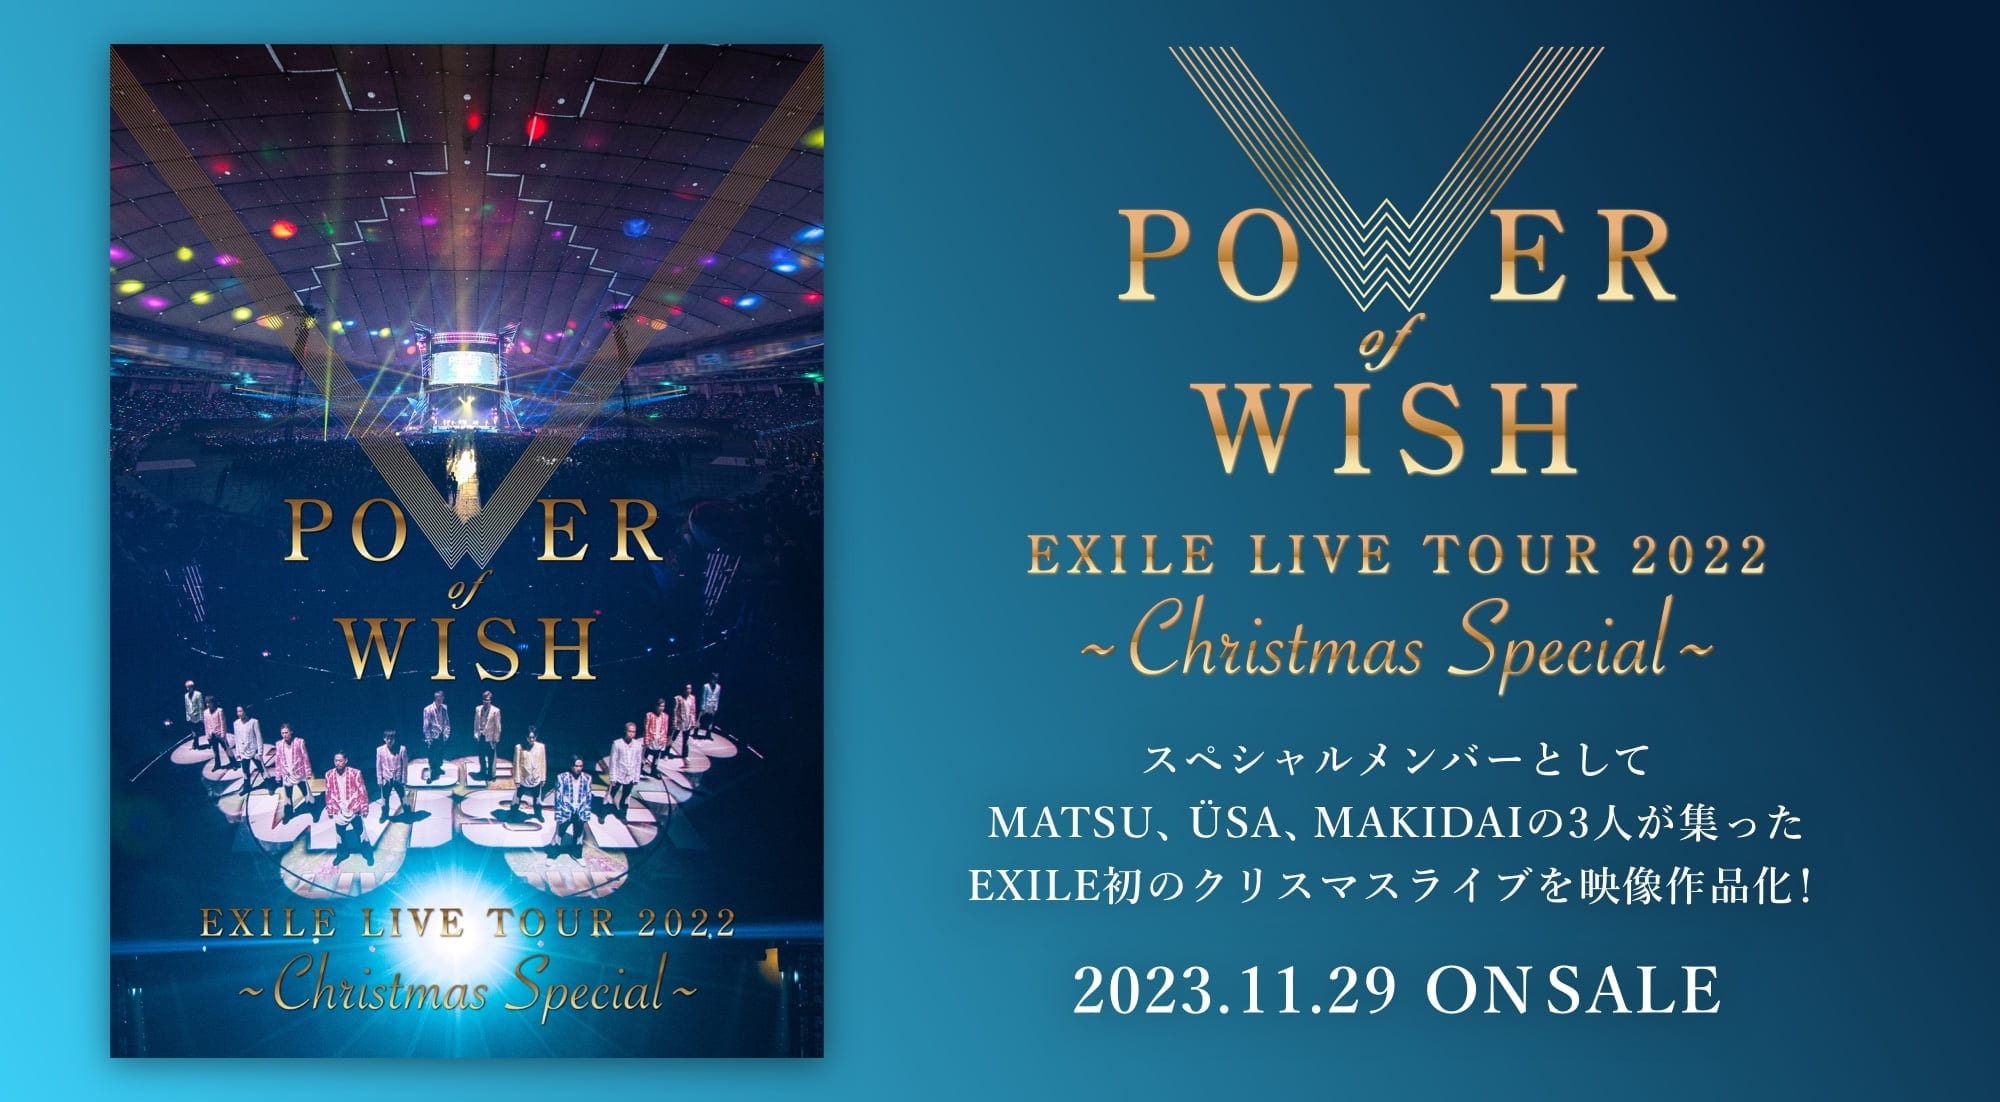 POWER WISH EXILE LIVE TOUR 2022 ～Christmas Special～ スペシャルメンバーとして MATSU、ÜSA、MAKIDAIの3人が集まった EXILE初のクリスマスライブを映像作品化! 2023.11.29 ON SALE